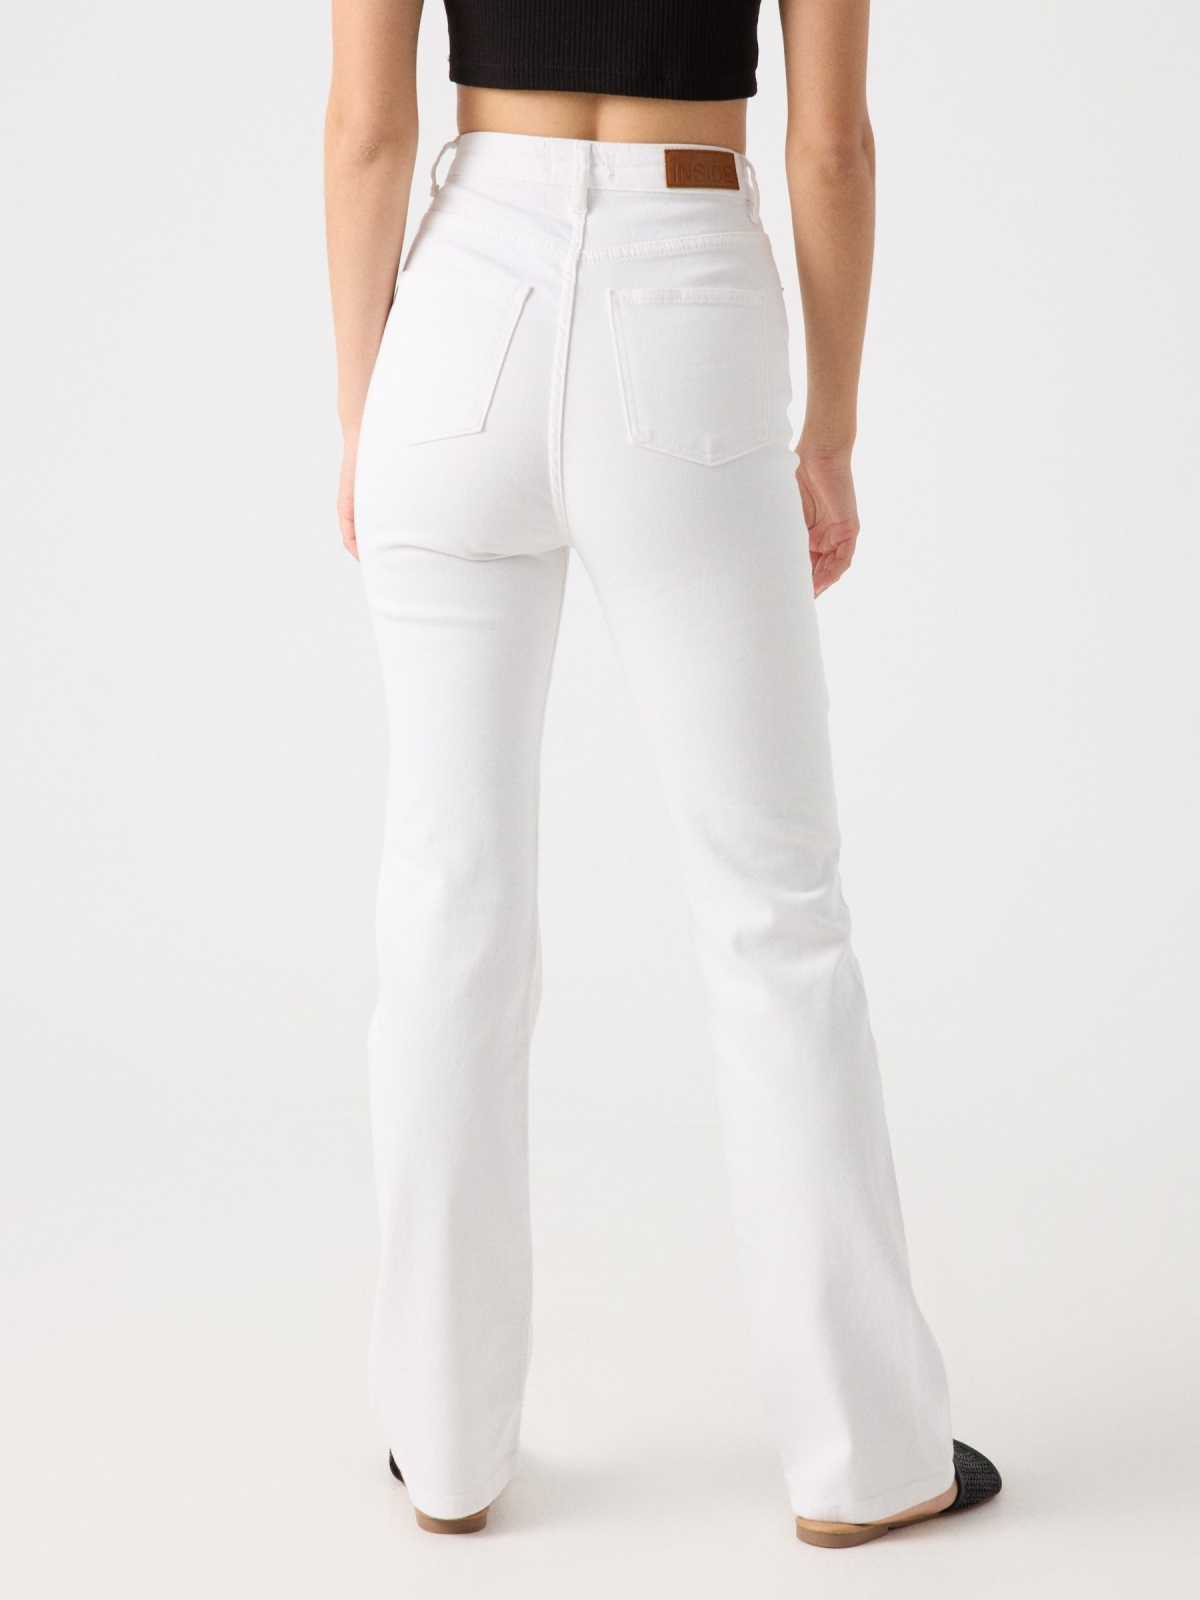 Jeans reta branca cintura alta branco vista meia traseira